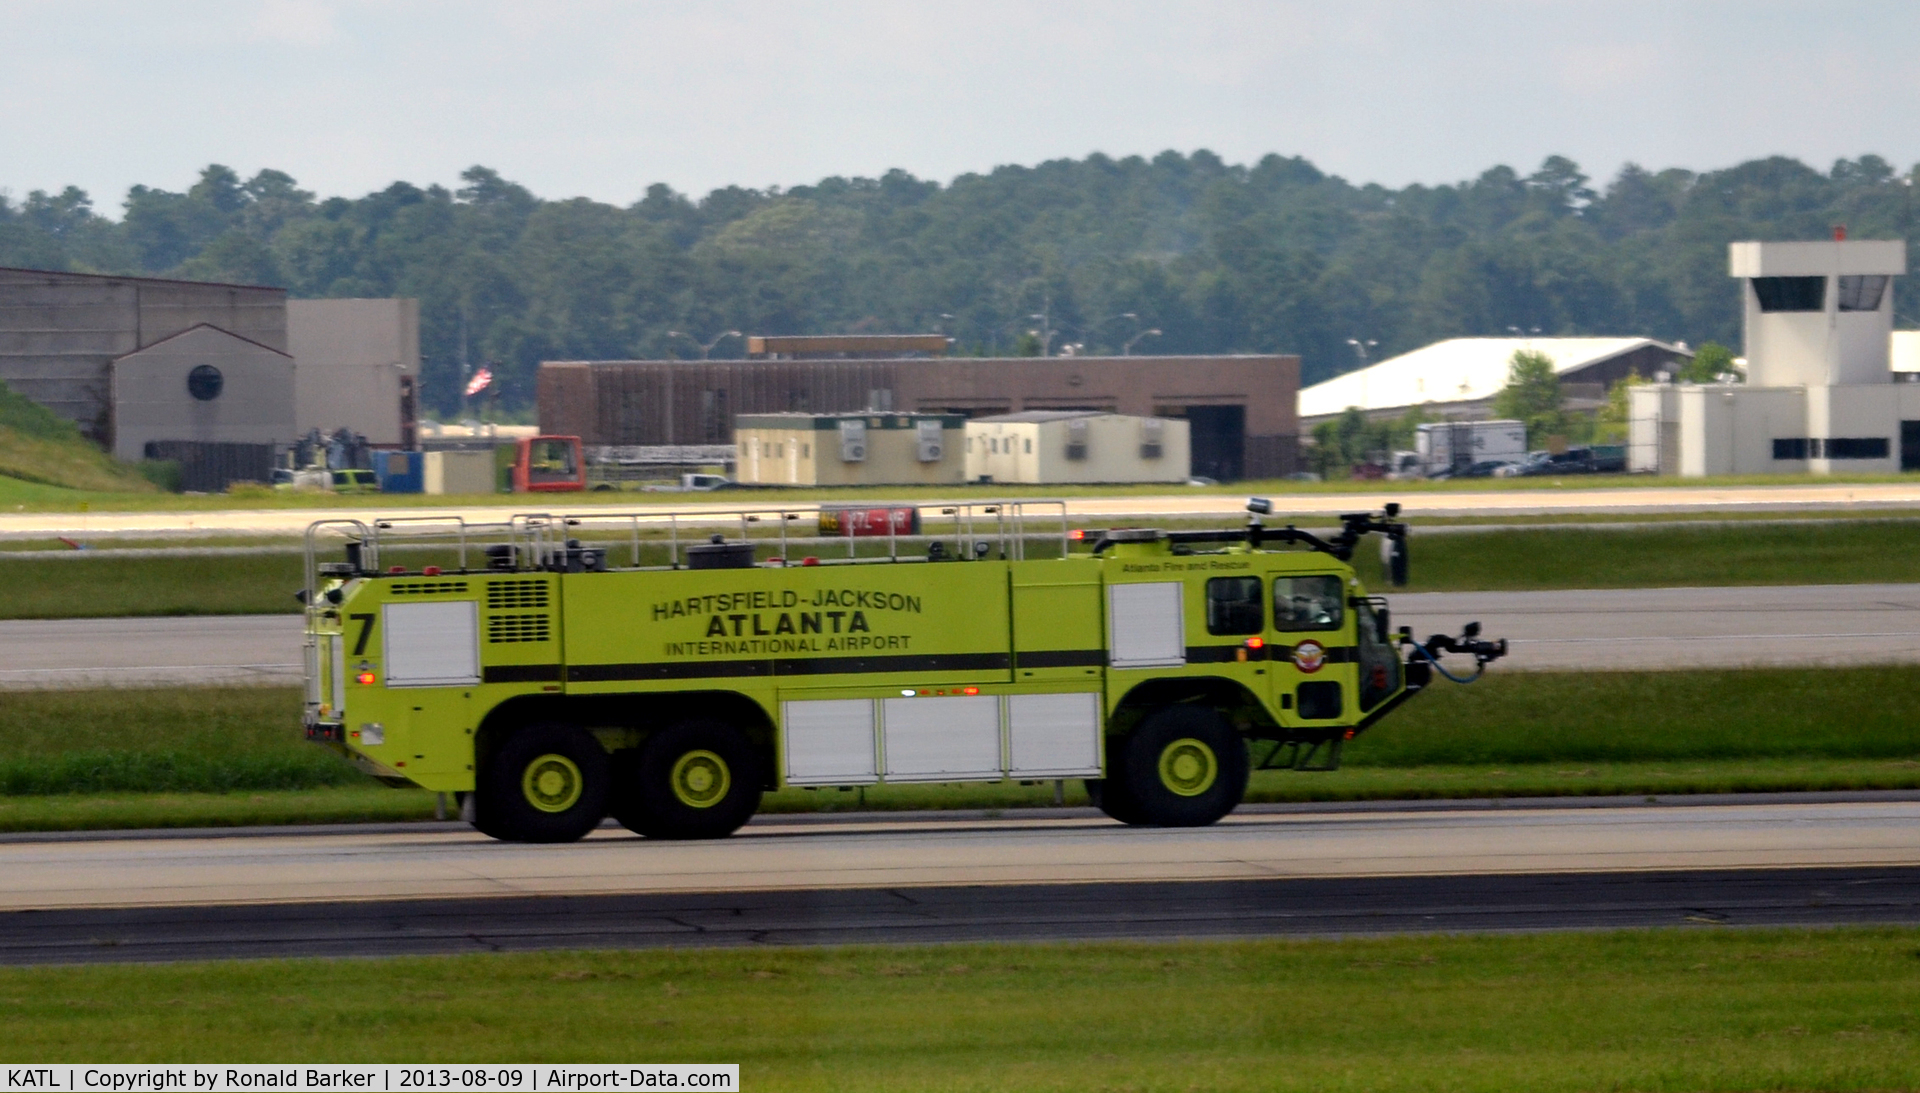 Hartsfield - Jackson Atlanta International Airport (ATL) - Fire truck number 7